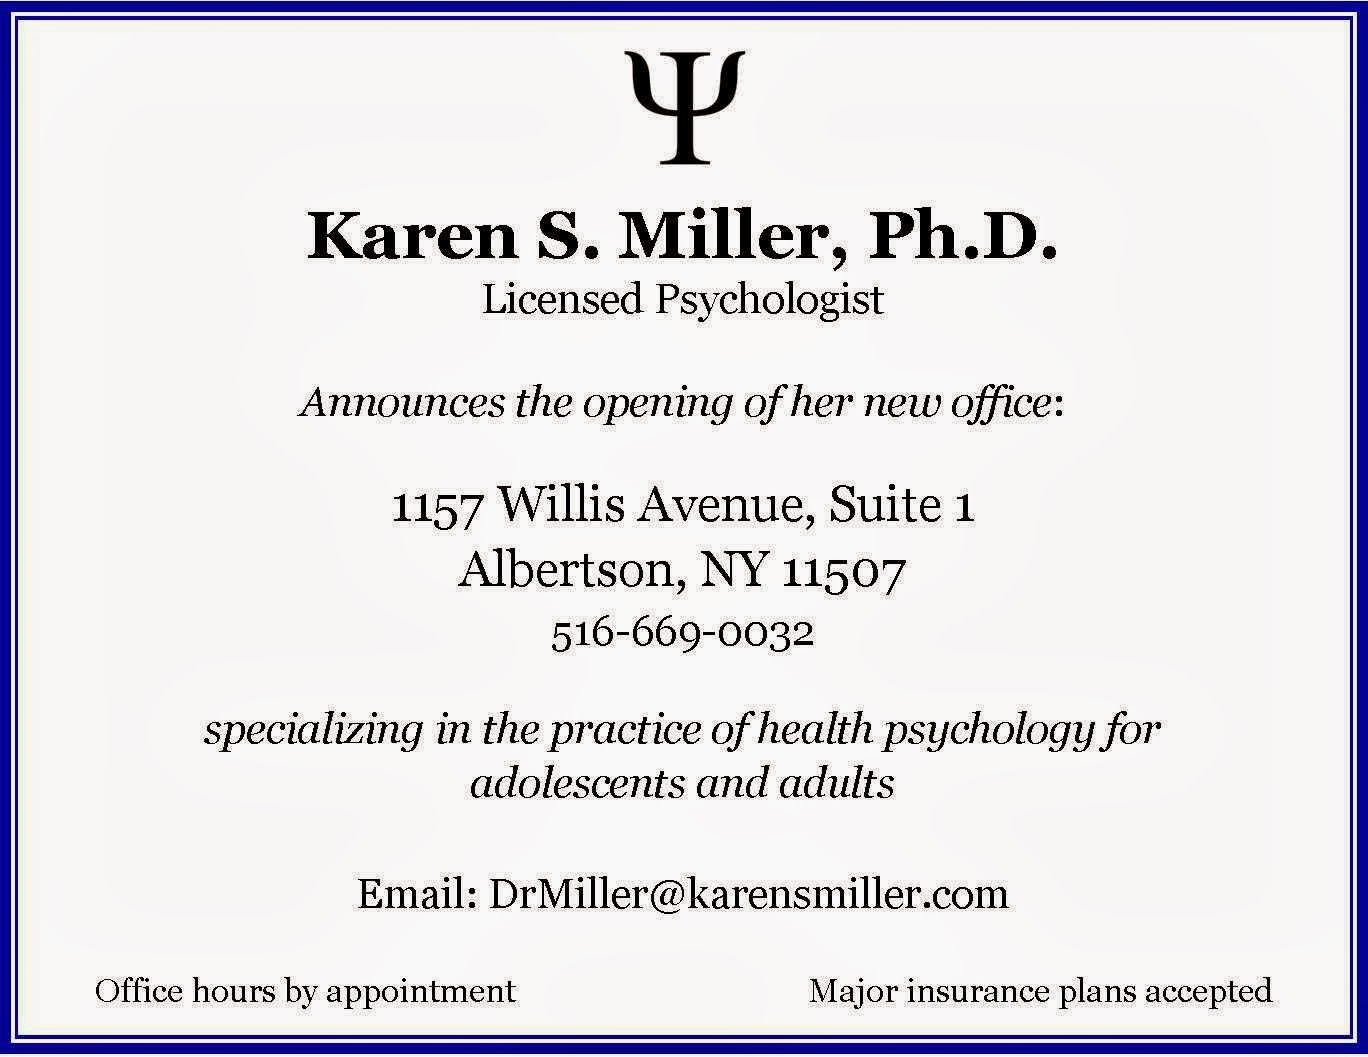 Photo of Karen S. Miller, Ph.D. Licensed Psychologist in Albertson City, New York, United States - 1 Picture of Point of interest, Establishment, Health